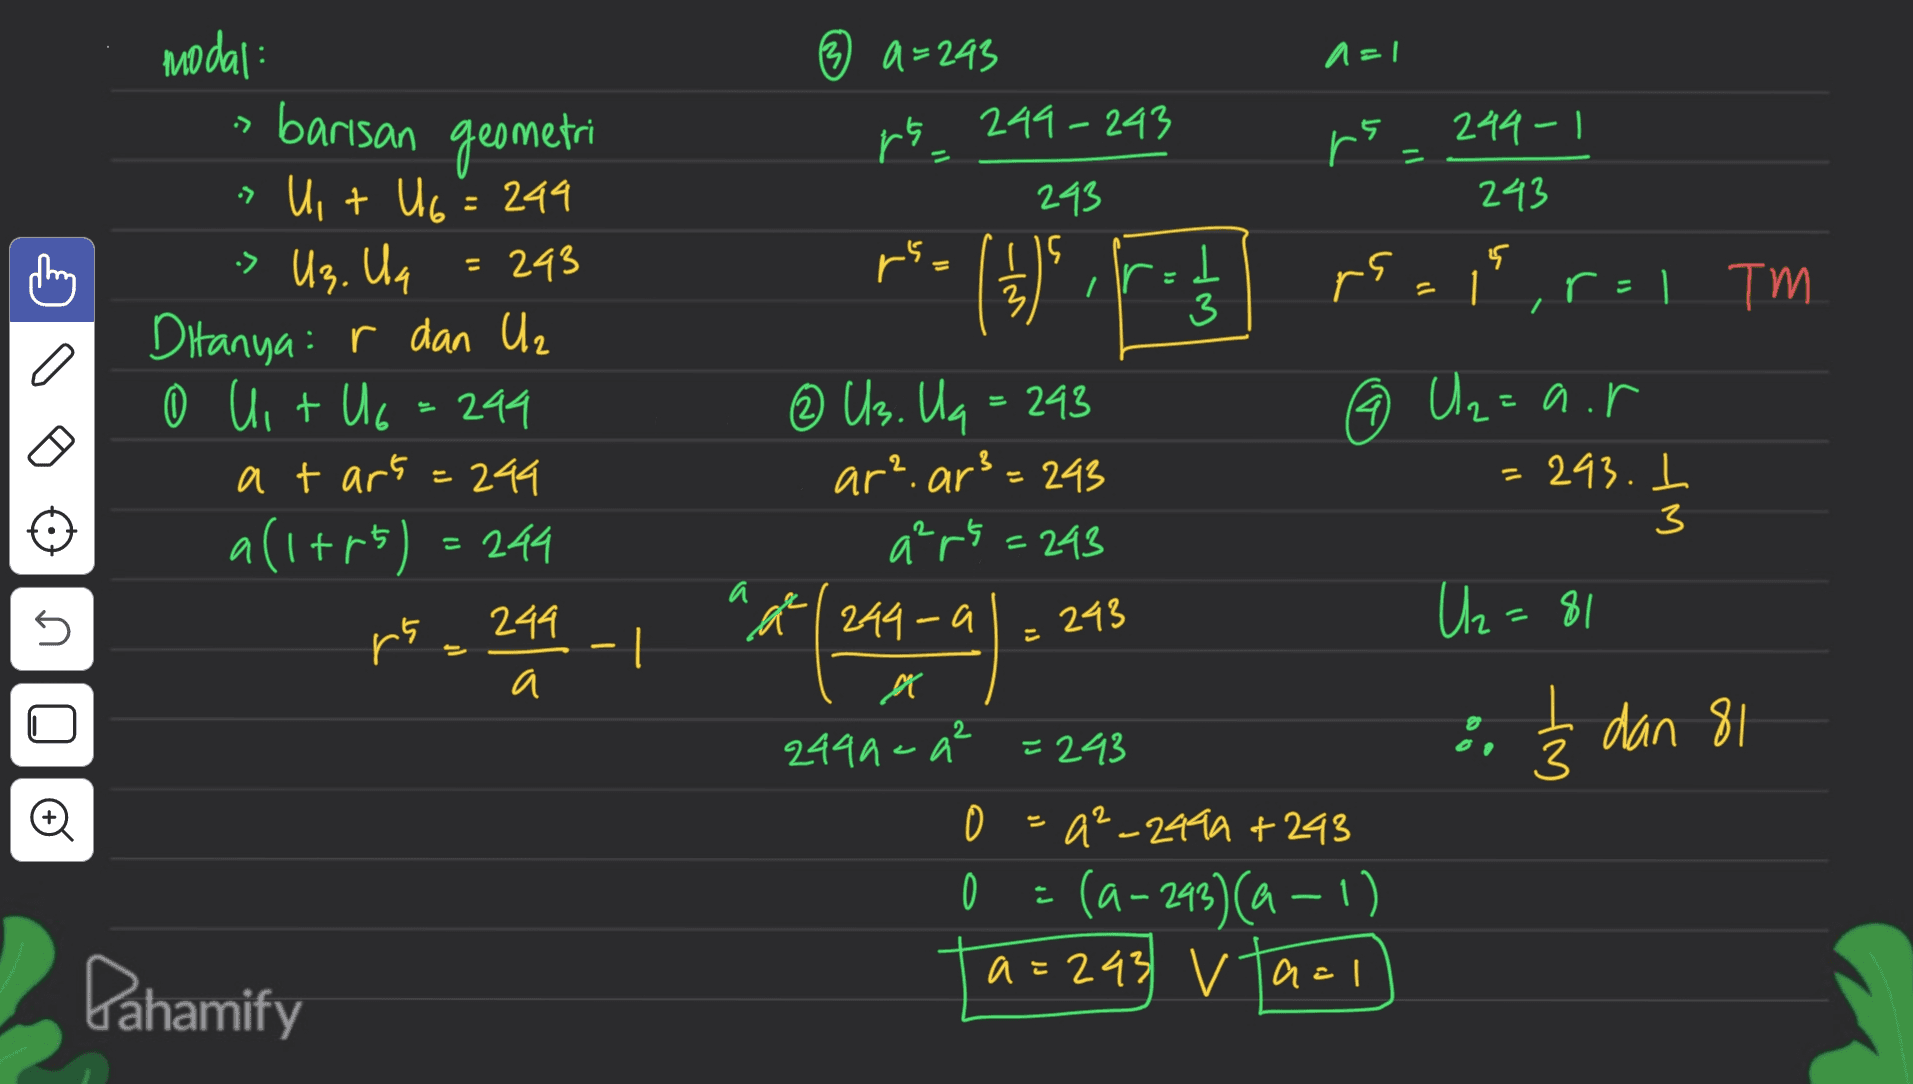 modal A= 3 a=243 249-243 :) barisan geometri ra, rs_ 244-1 • 243 243 > Us. Un = rs. s (1) ir I 3 rs. = 1, r=1 TM r > Uit U6 = 244 293 Ditanya: r dan Uz (0) + 0 Uit U6 = 299 a tart=244 all+r5) = 244 rs 244 a 9 ③ Us. Ug = 293 ar? ar3=245 a²r5 = 243 Uz=a.r = 243. I 3 IM a a n 244-a 243 U2=81 - | 2 3 dan 81 3 M 2449 - q² =293 - 0 a²_2494 +243 0 (a-293)(a −1) a=243 vazi Pahamify 